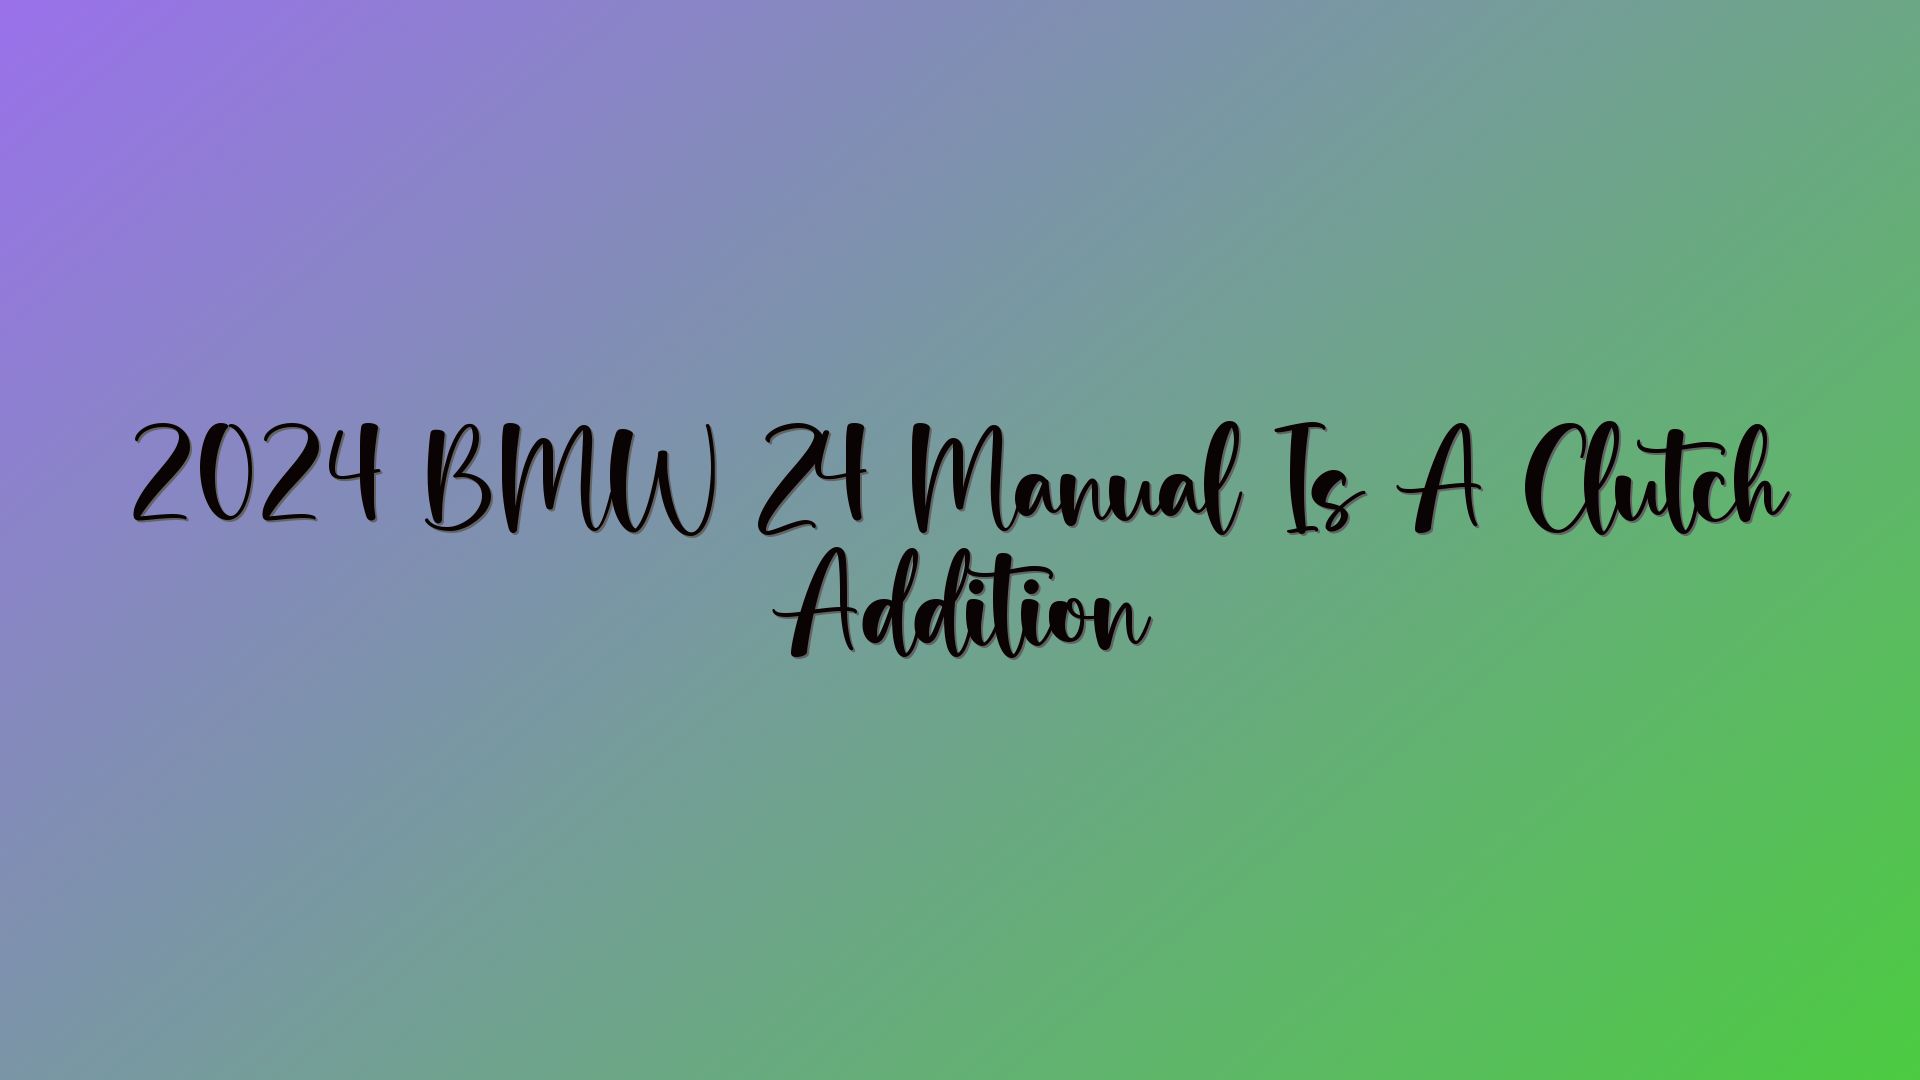 2024 BMW Z4 Manual Is A Clutch Addition